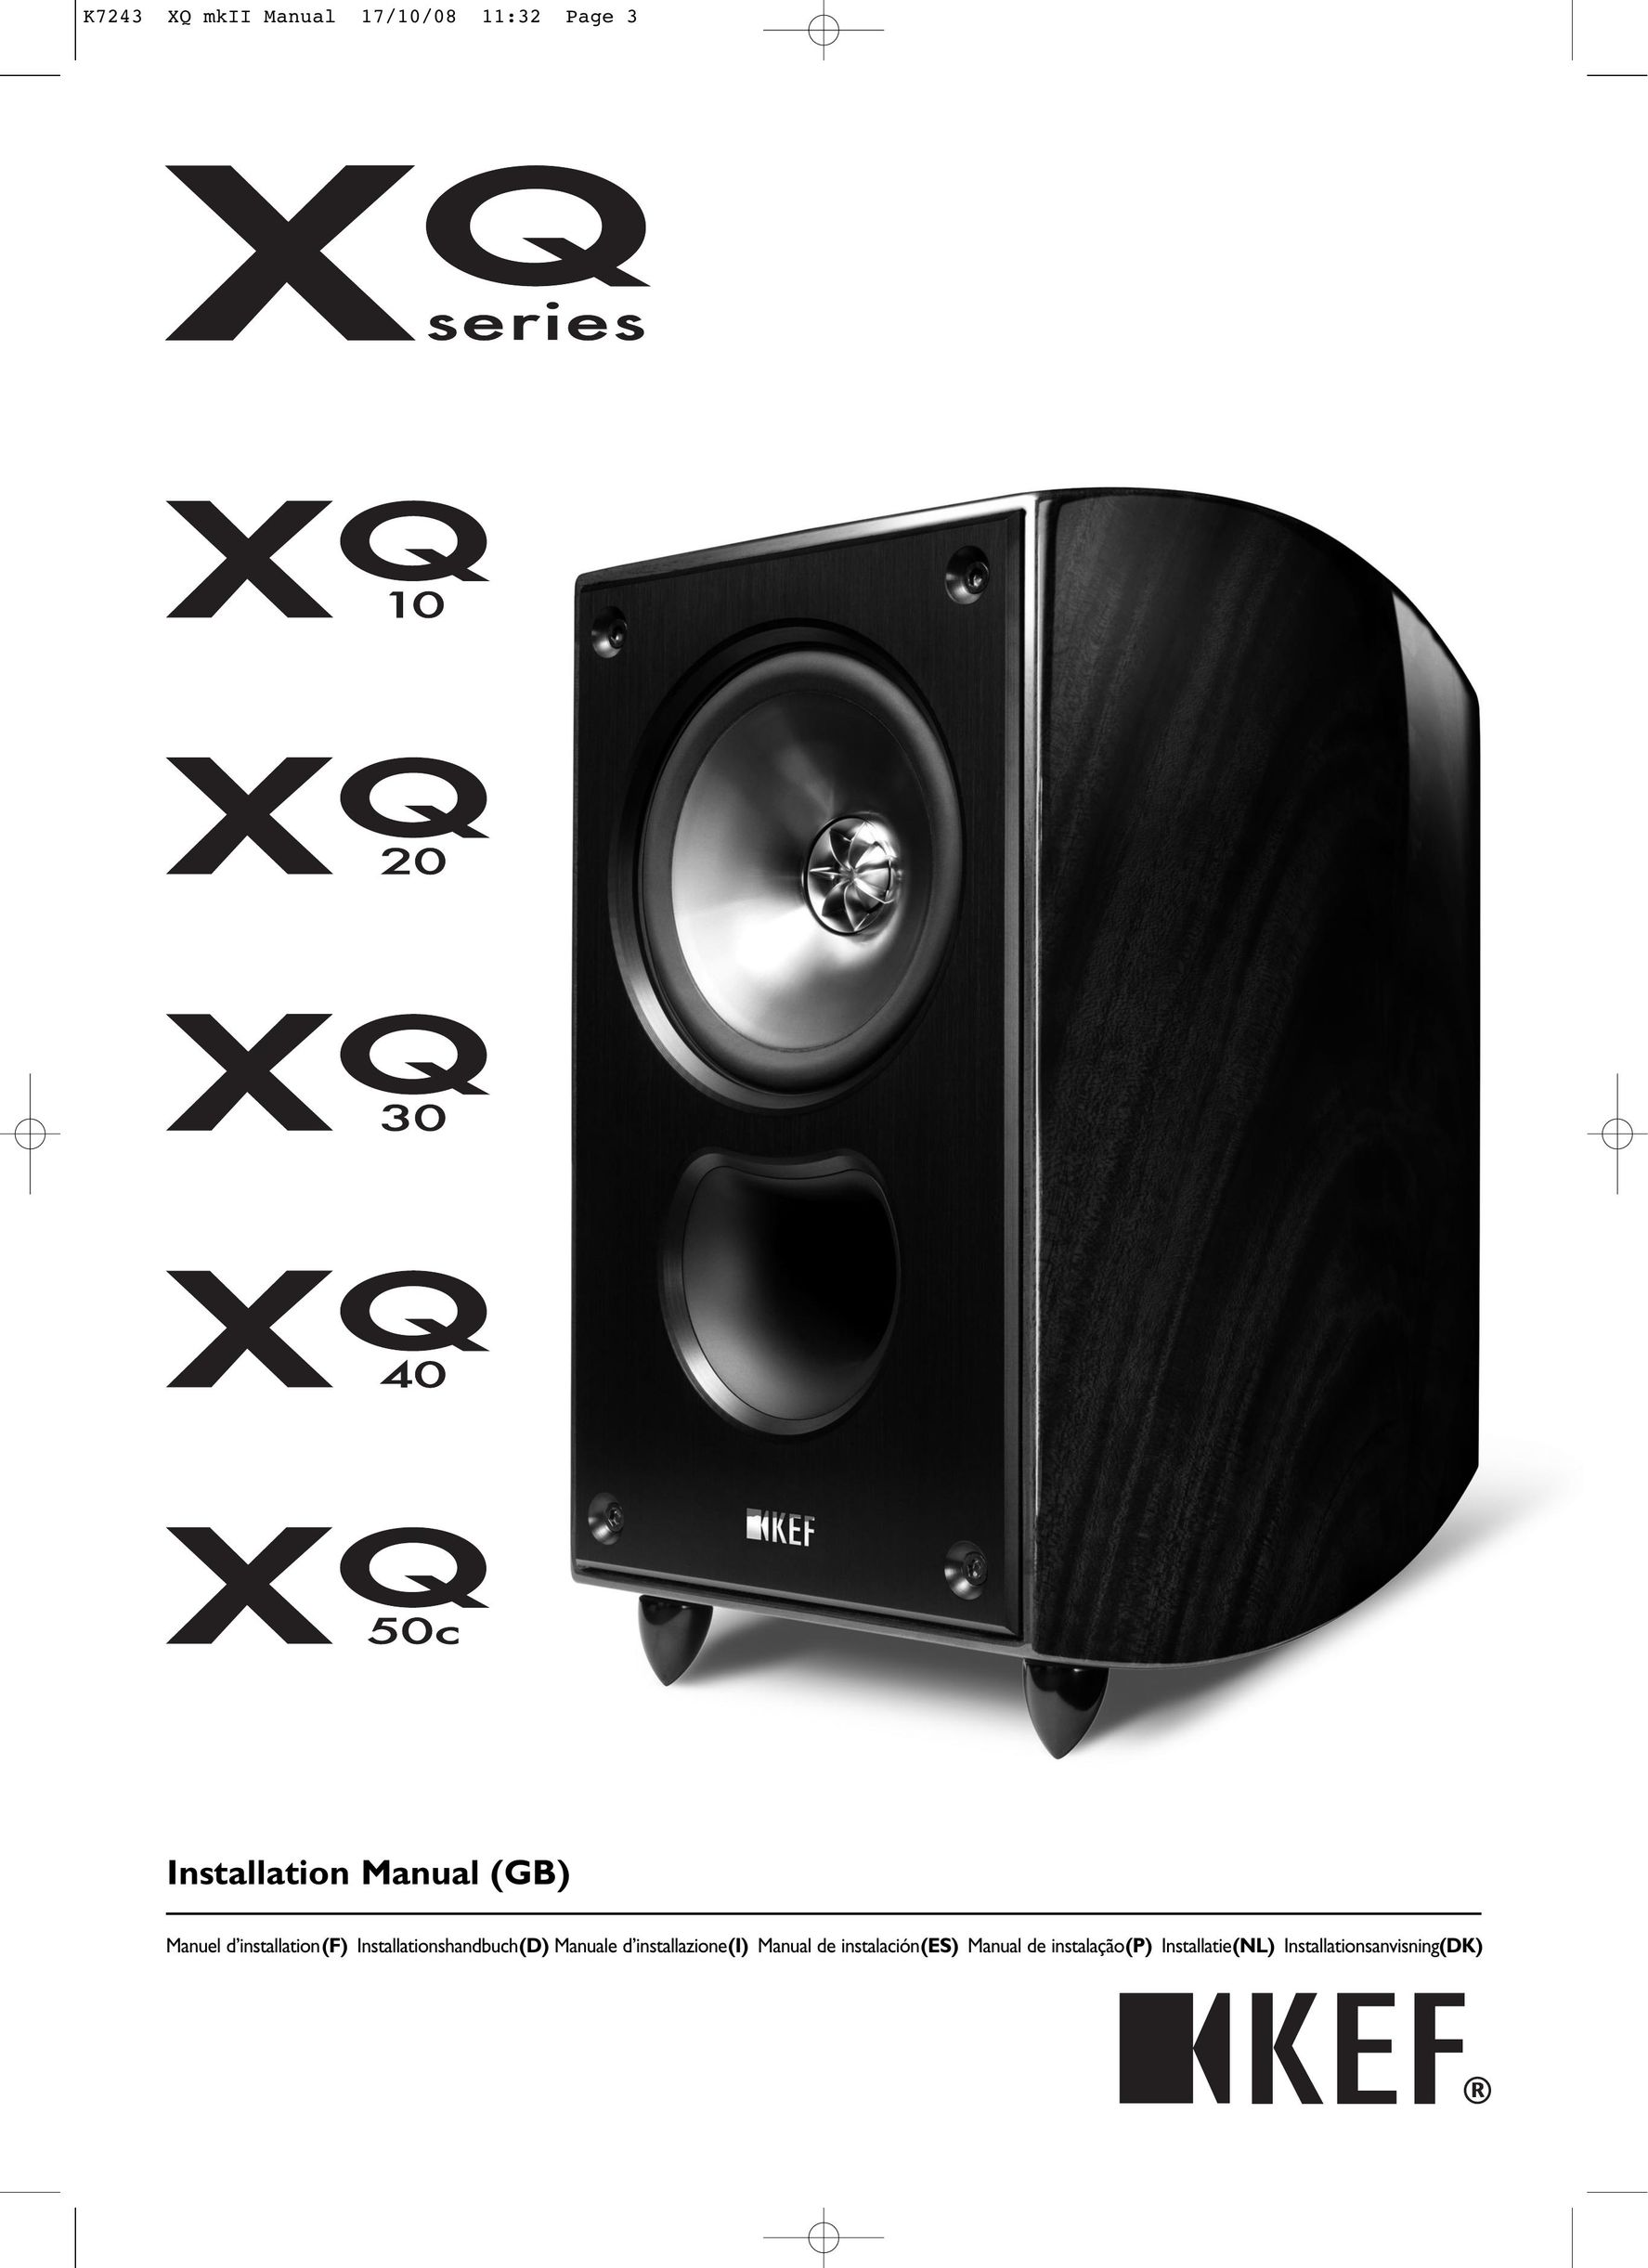 KEF Audio XQ20 Speaker User Manual